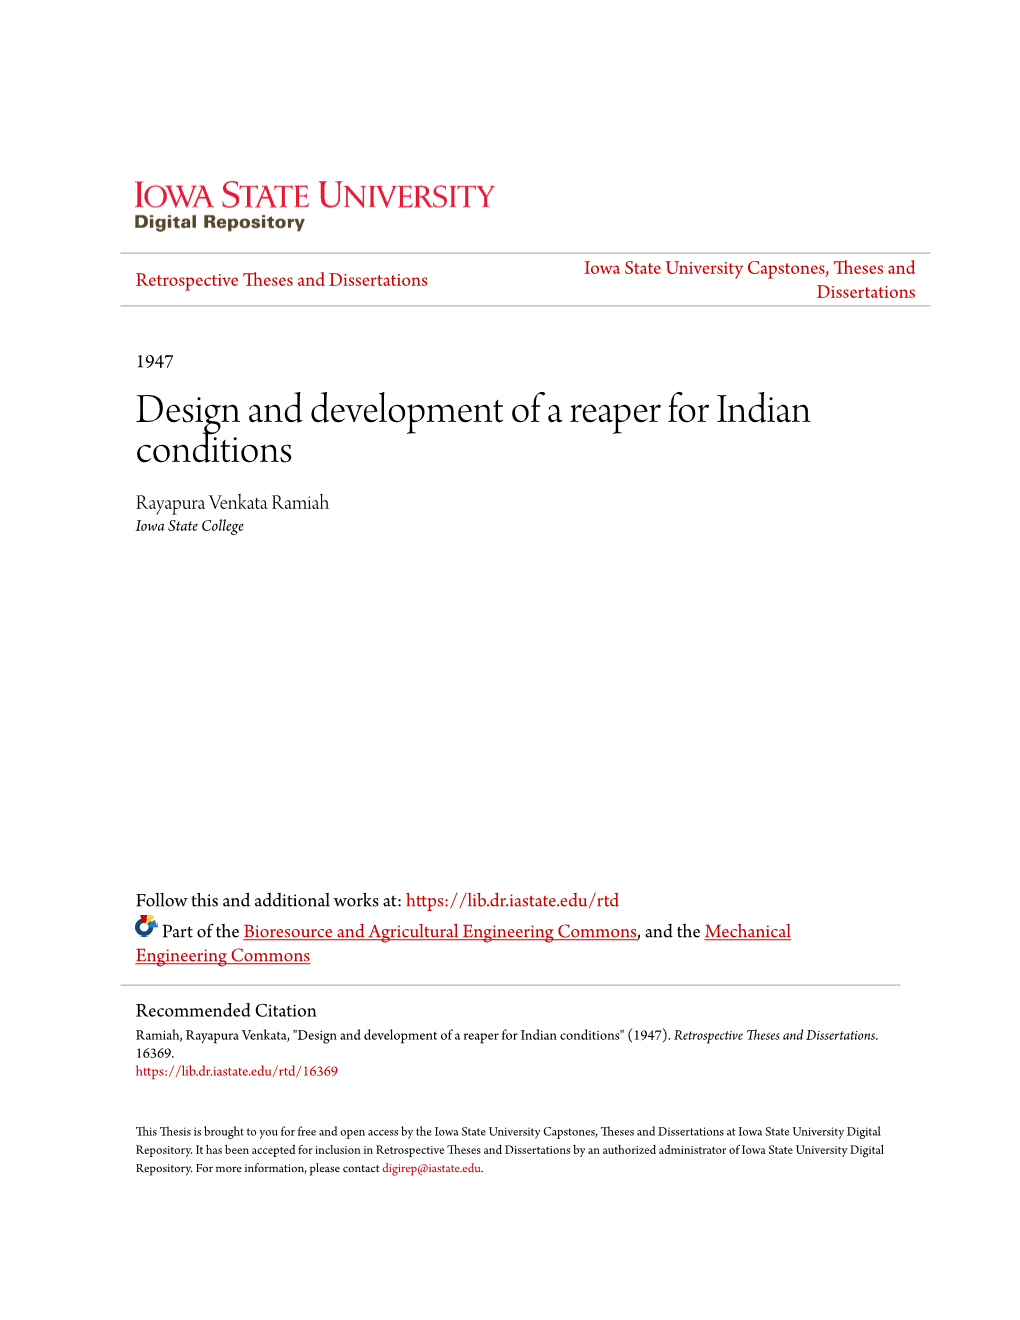 Design and Development of a Reaper for Indian Conditions Rayapura Venkata Ramiah Iowa State College